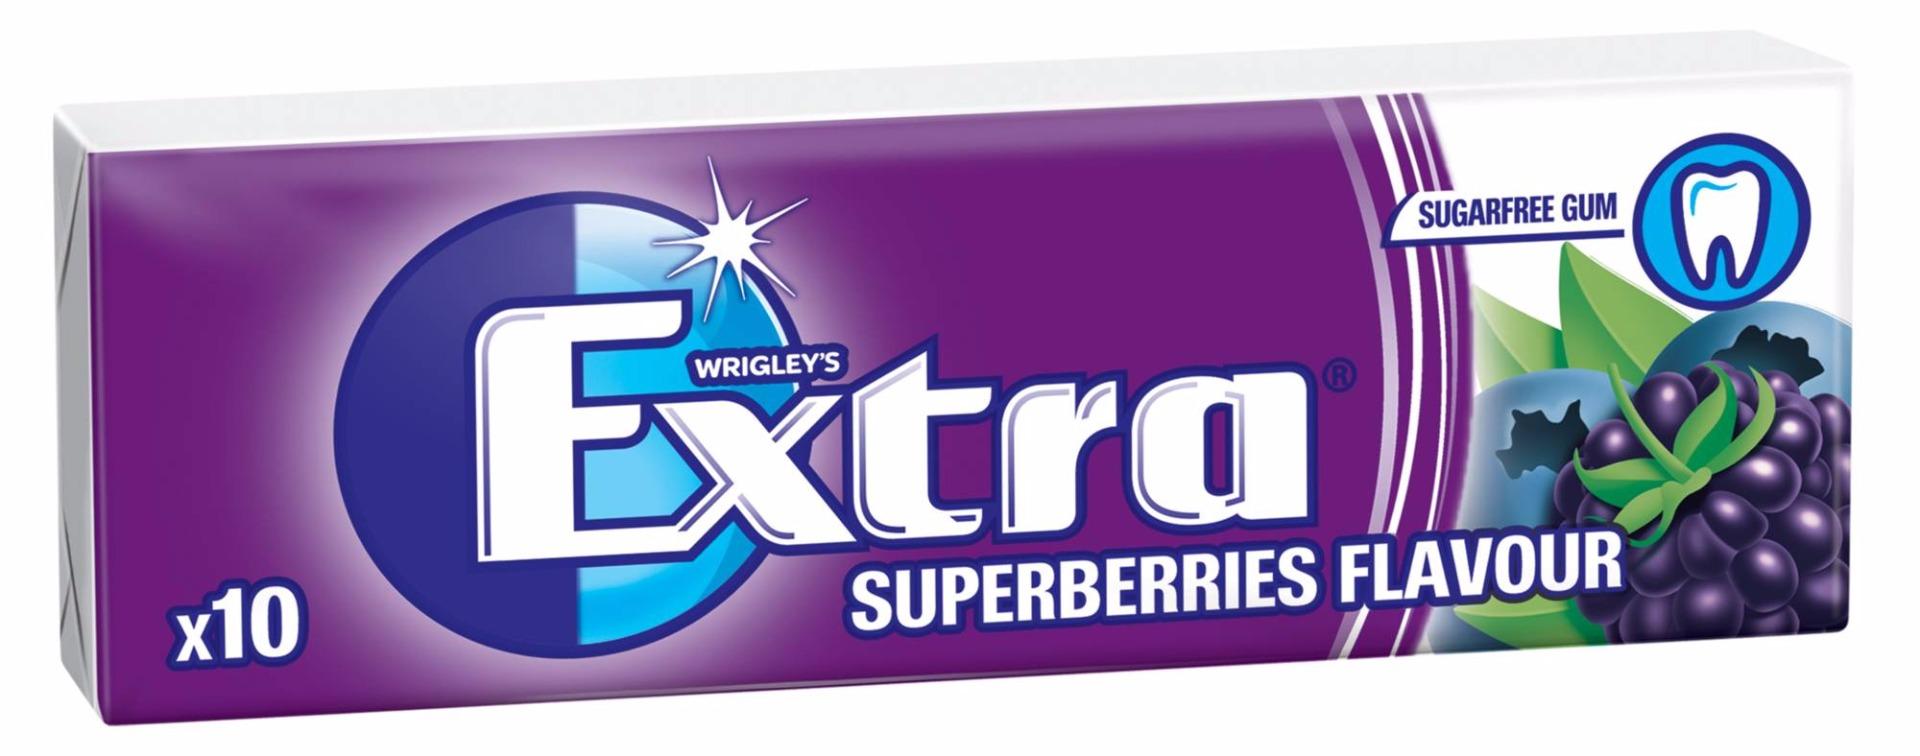 Extra Superberries 14 g